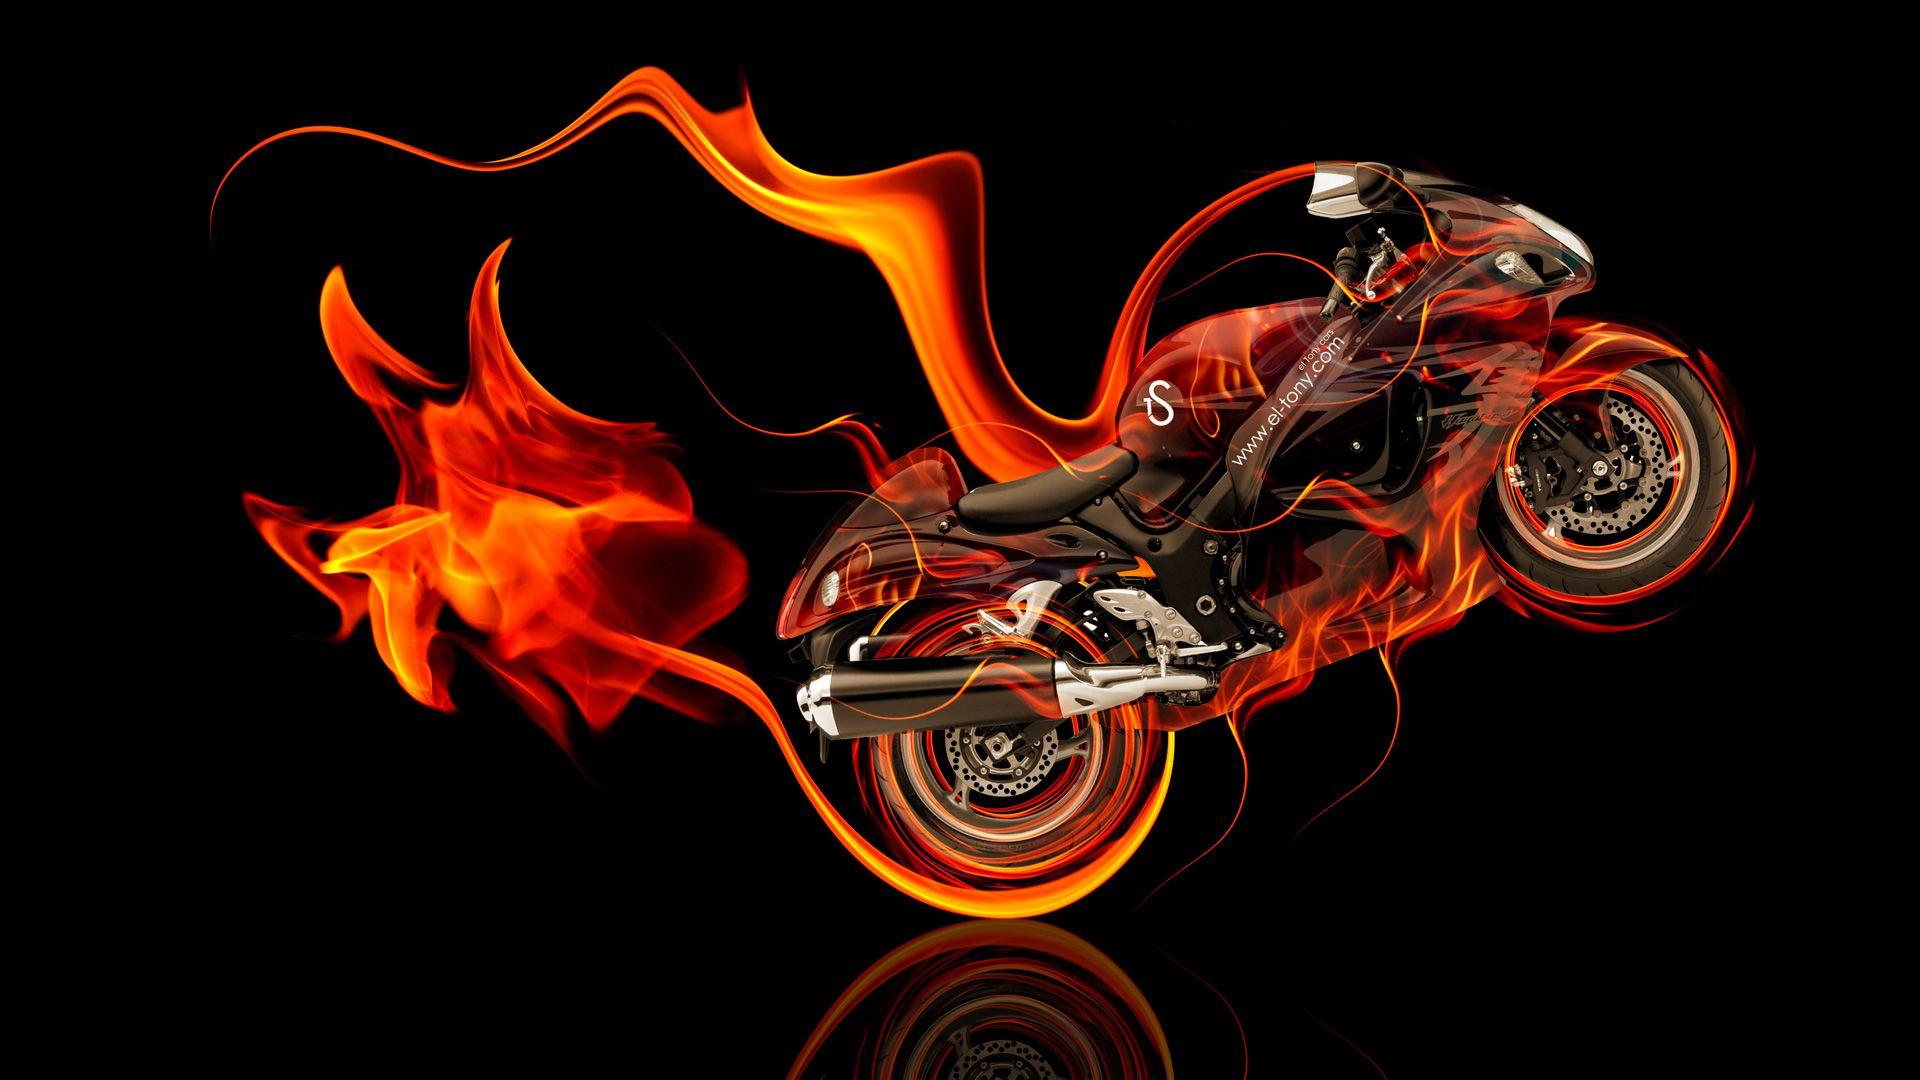 Suzuki Hayabusa Side Super Fire Abstract Bike 2014